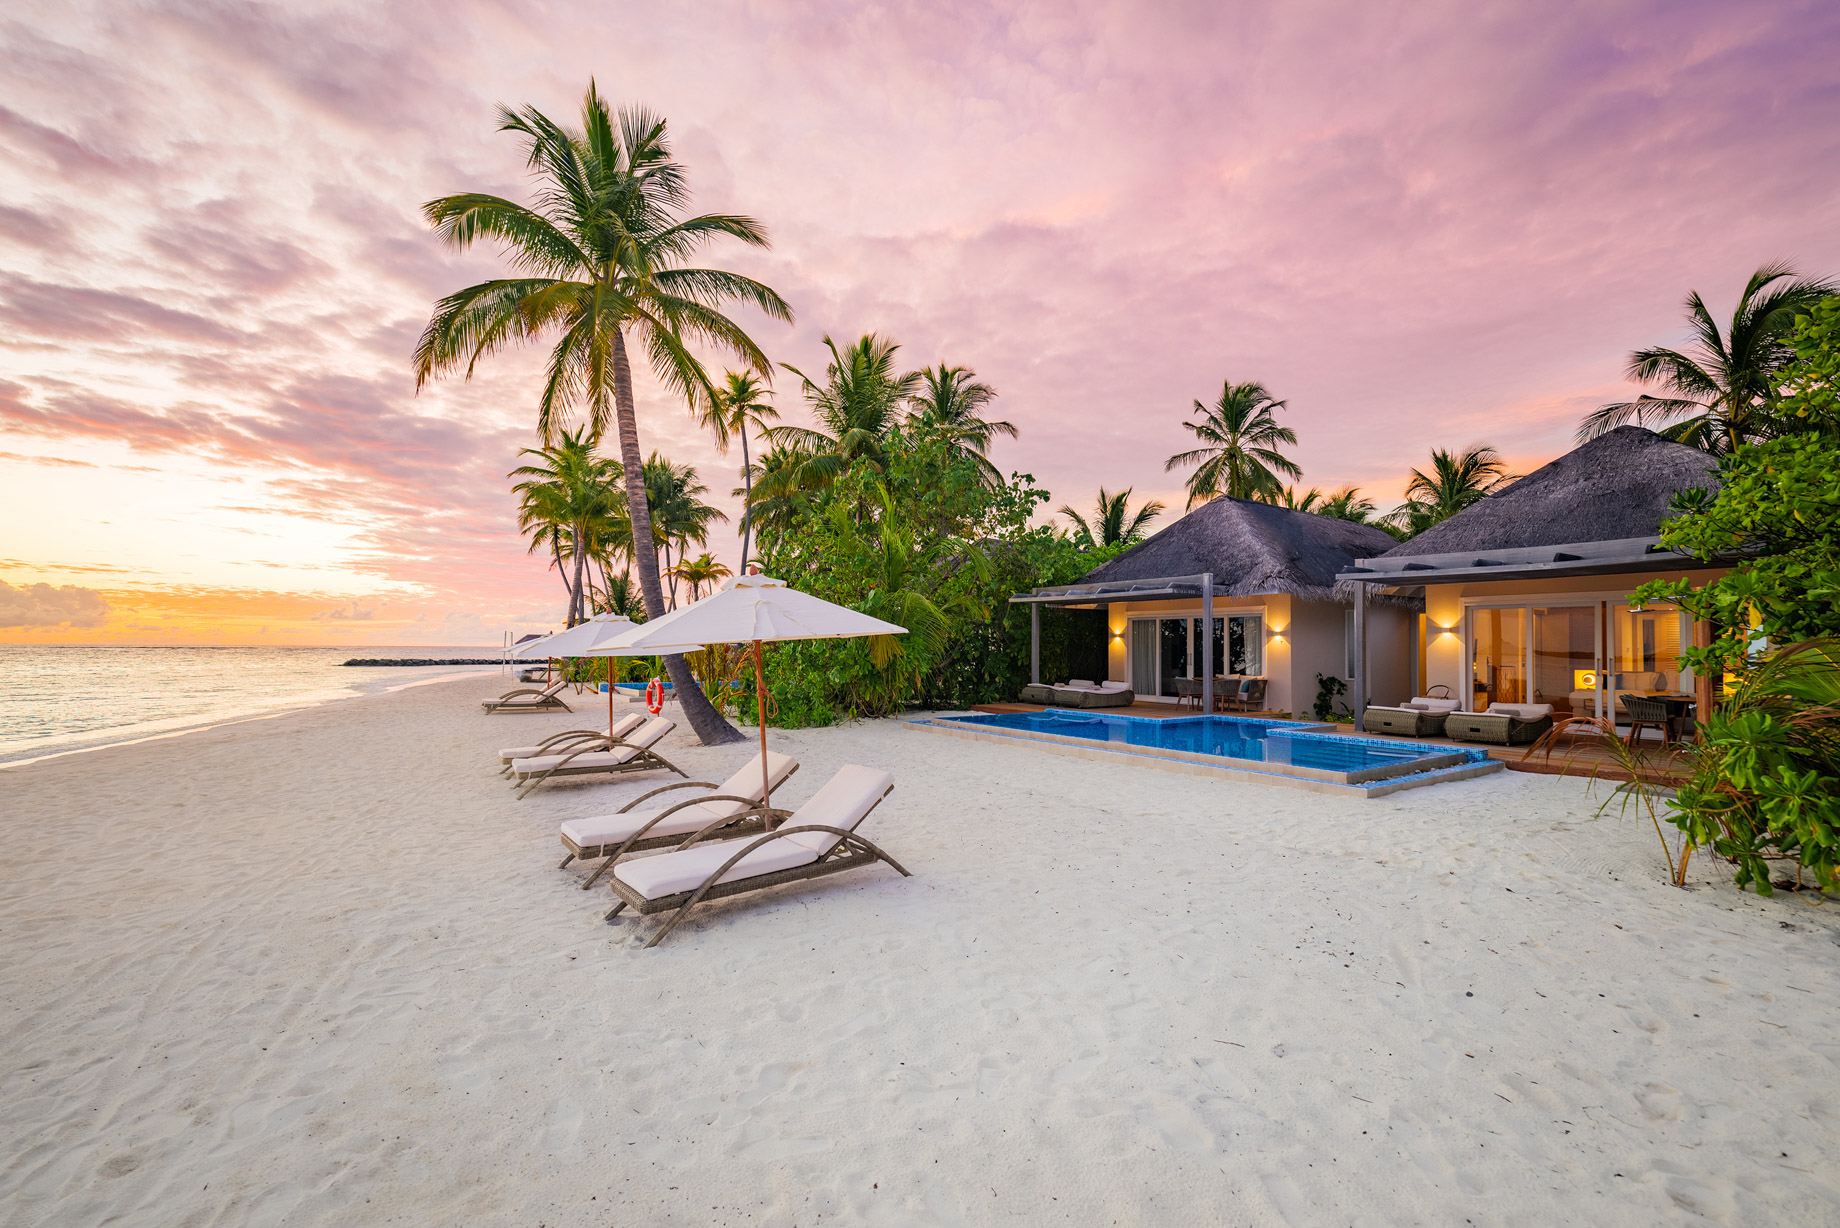 Baglioni Resort Maldives - Maagau Island, Rinbudhoo, Maldives - Beach Villas Ocean View Sunset